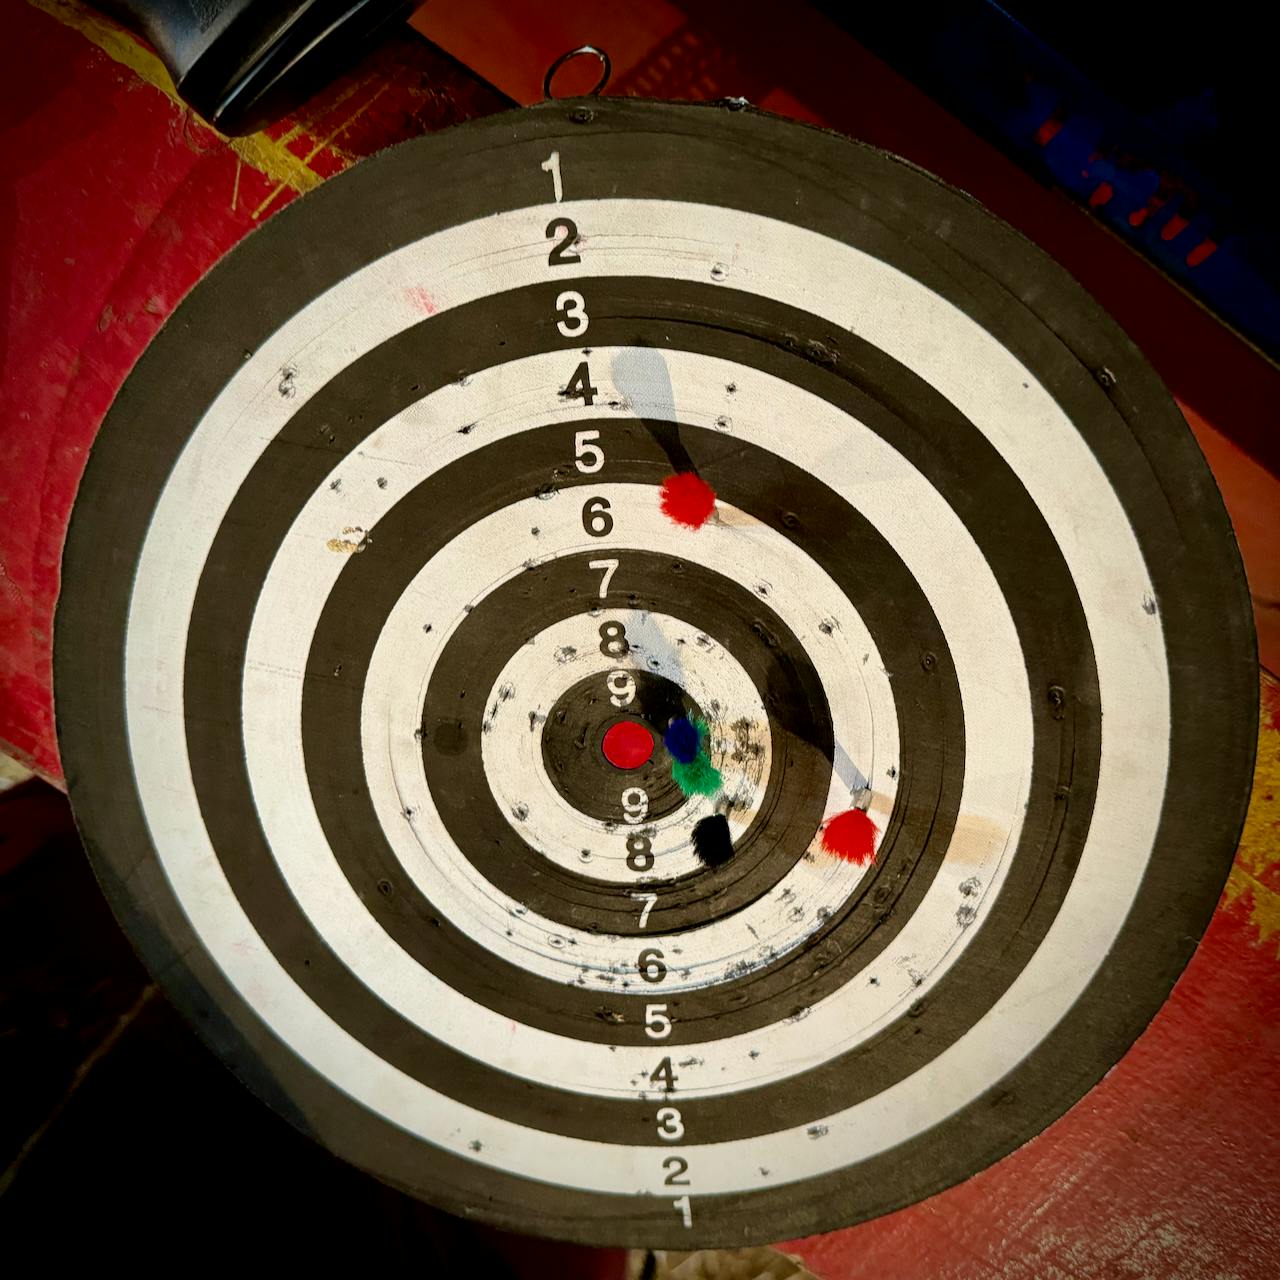 Dart gun and target board, showing 2 dart on 6 points, 1 dart on 8 points, and 2 on 9 points, for a total of 38 points